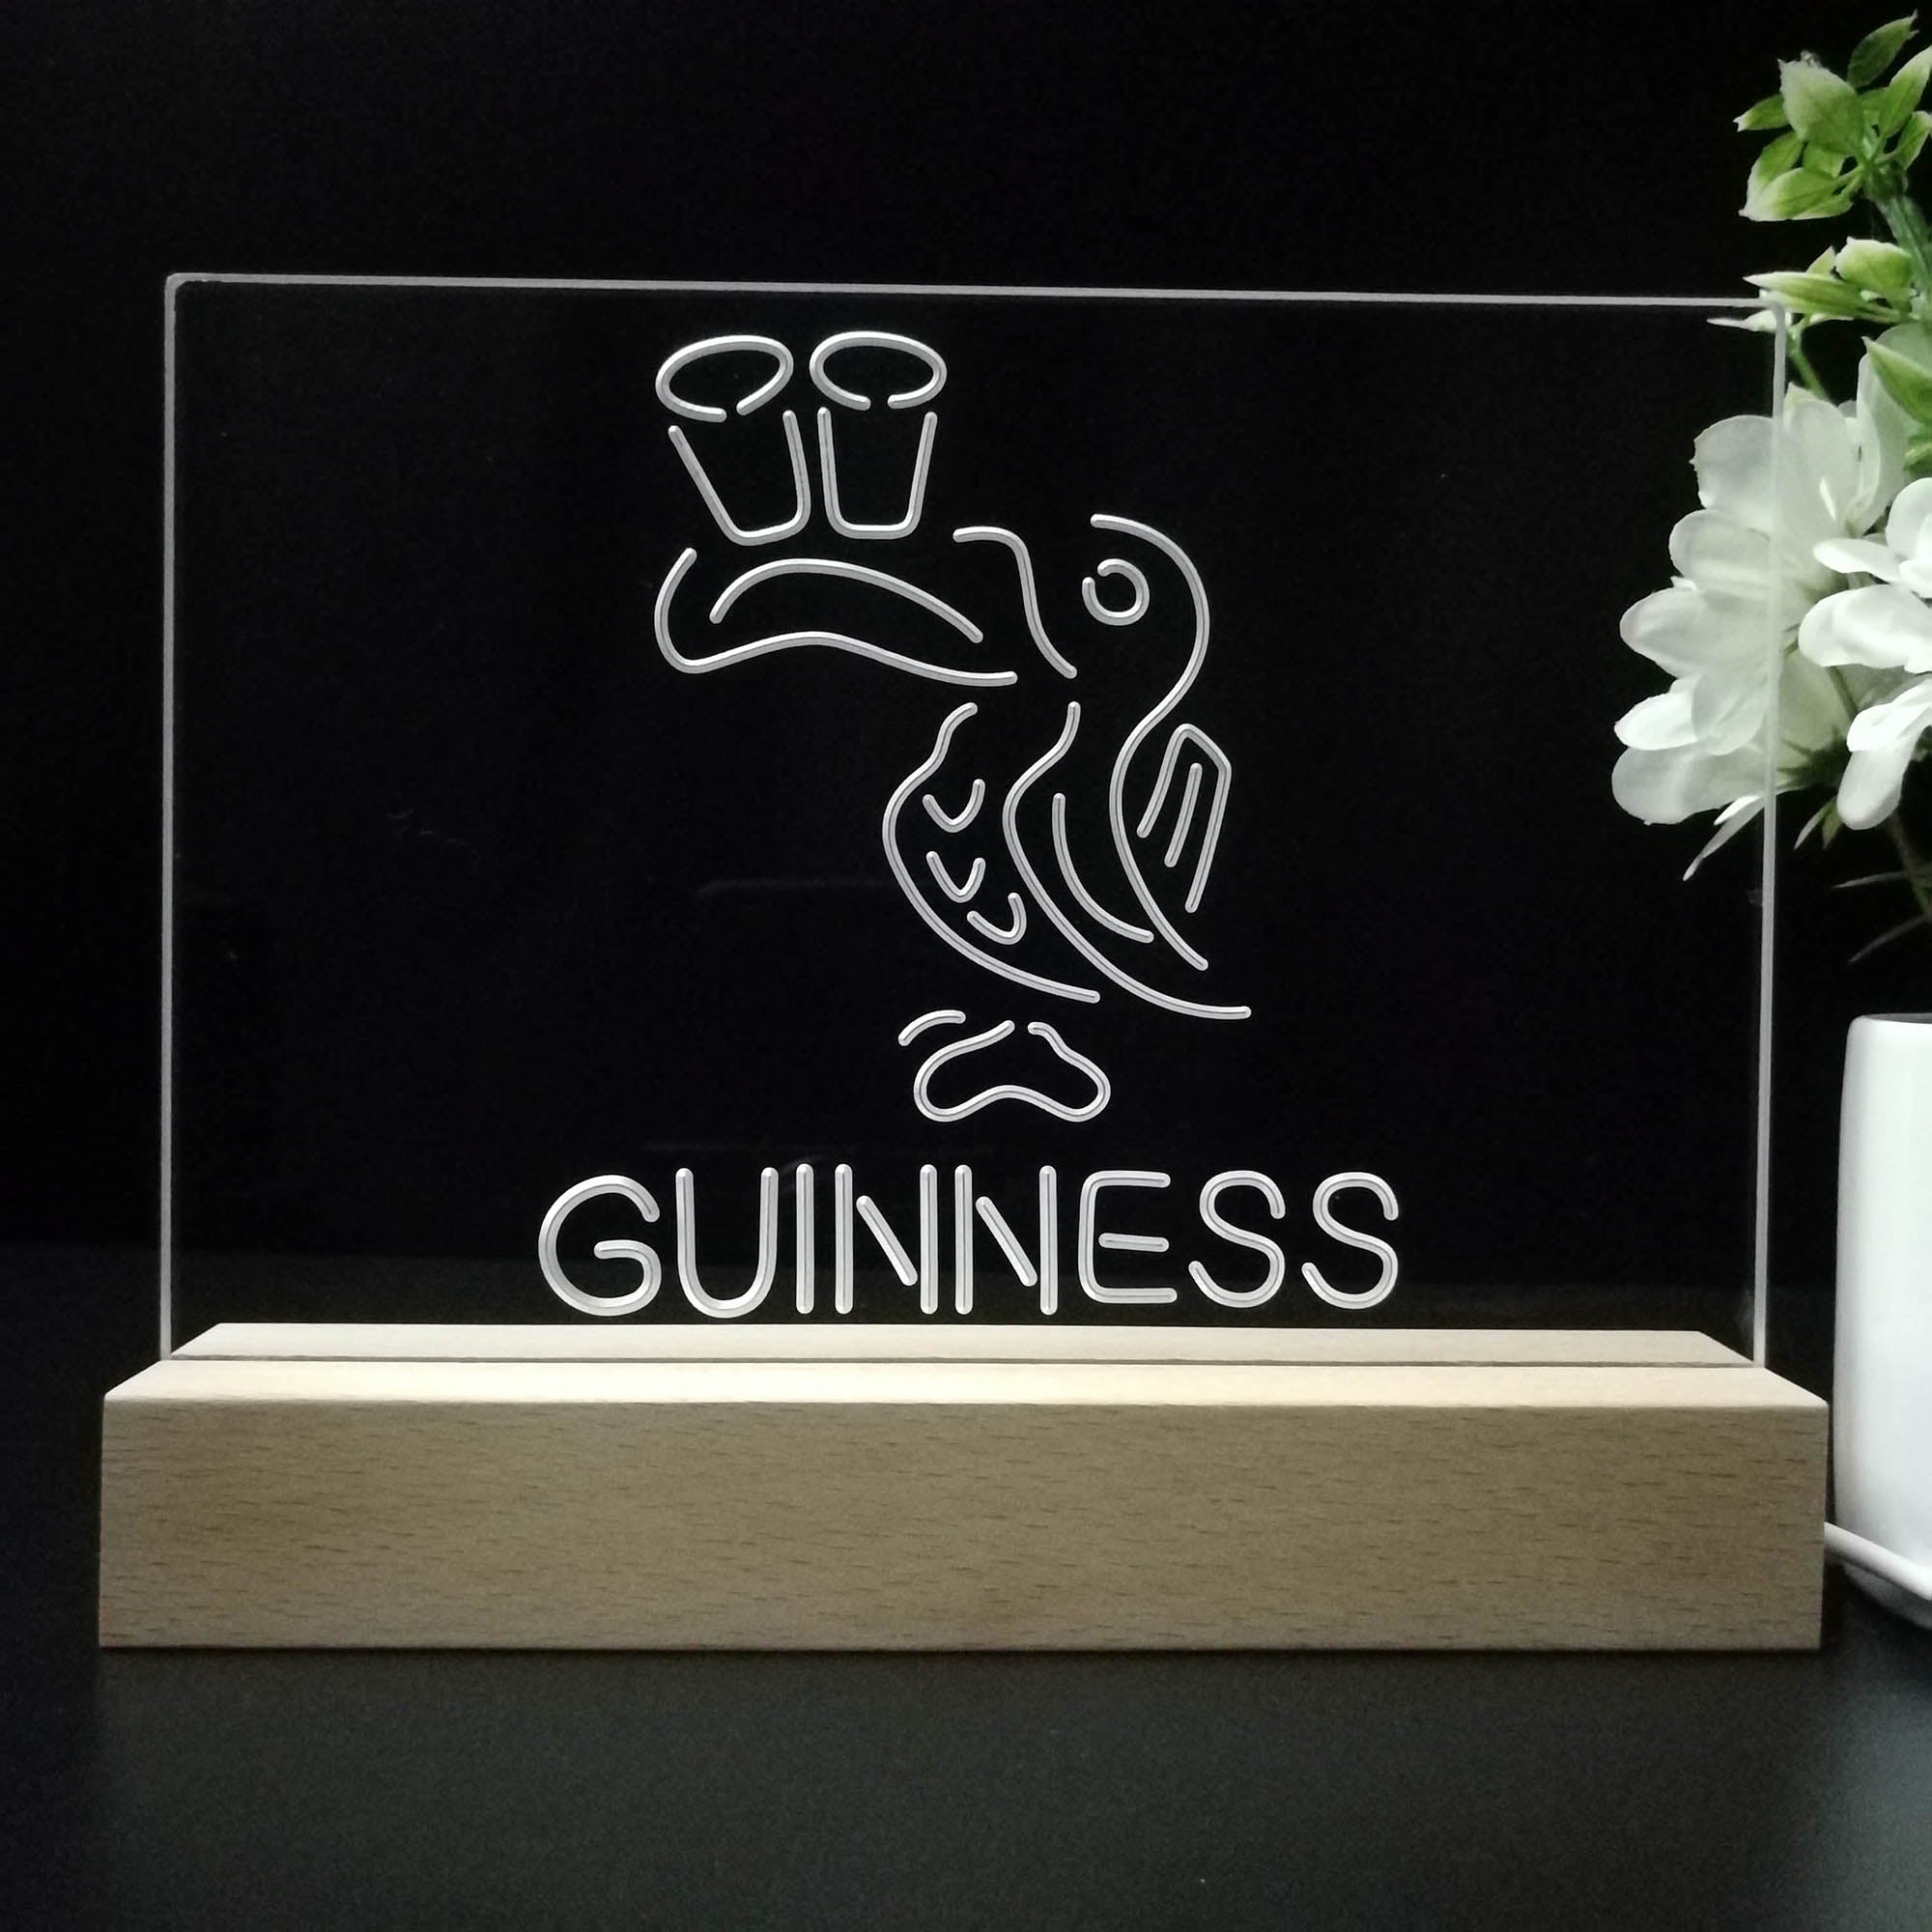 Lovely Day Guinness Beer Toucan Neon Sign Pub Bar Lamp